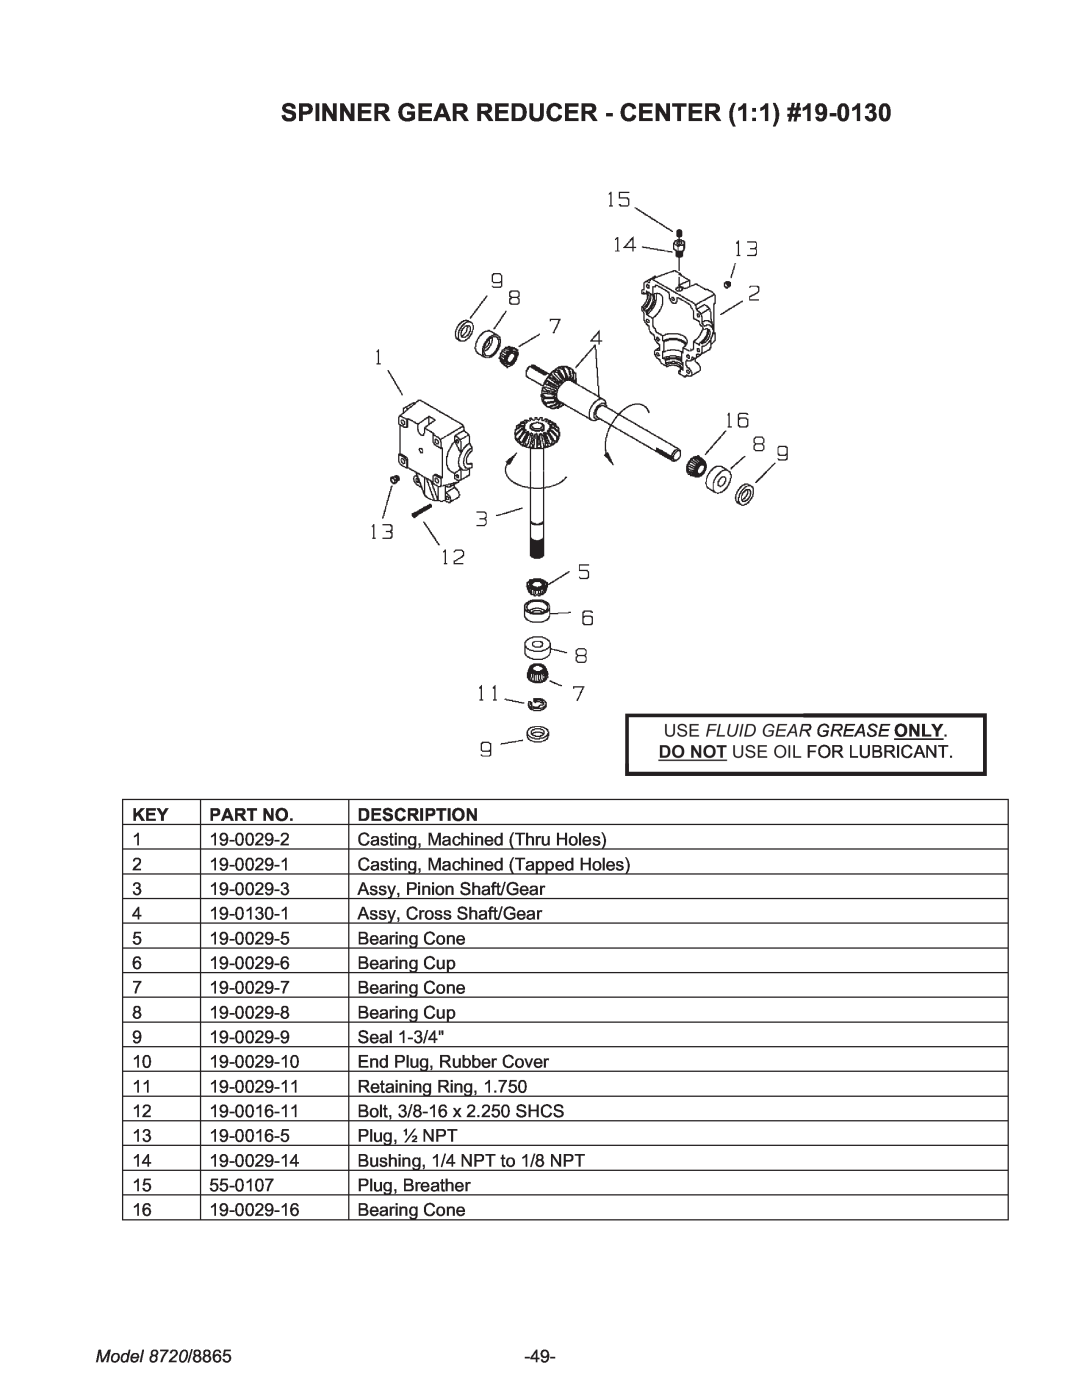 Meyer manual SPINNER GEAR REDUCER - CENTER 11 #19-0130, Use Fluid Gear Grease Only, Description, Model 8720/8865 